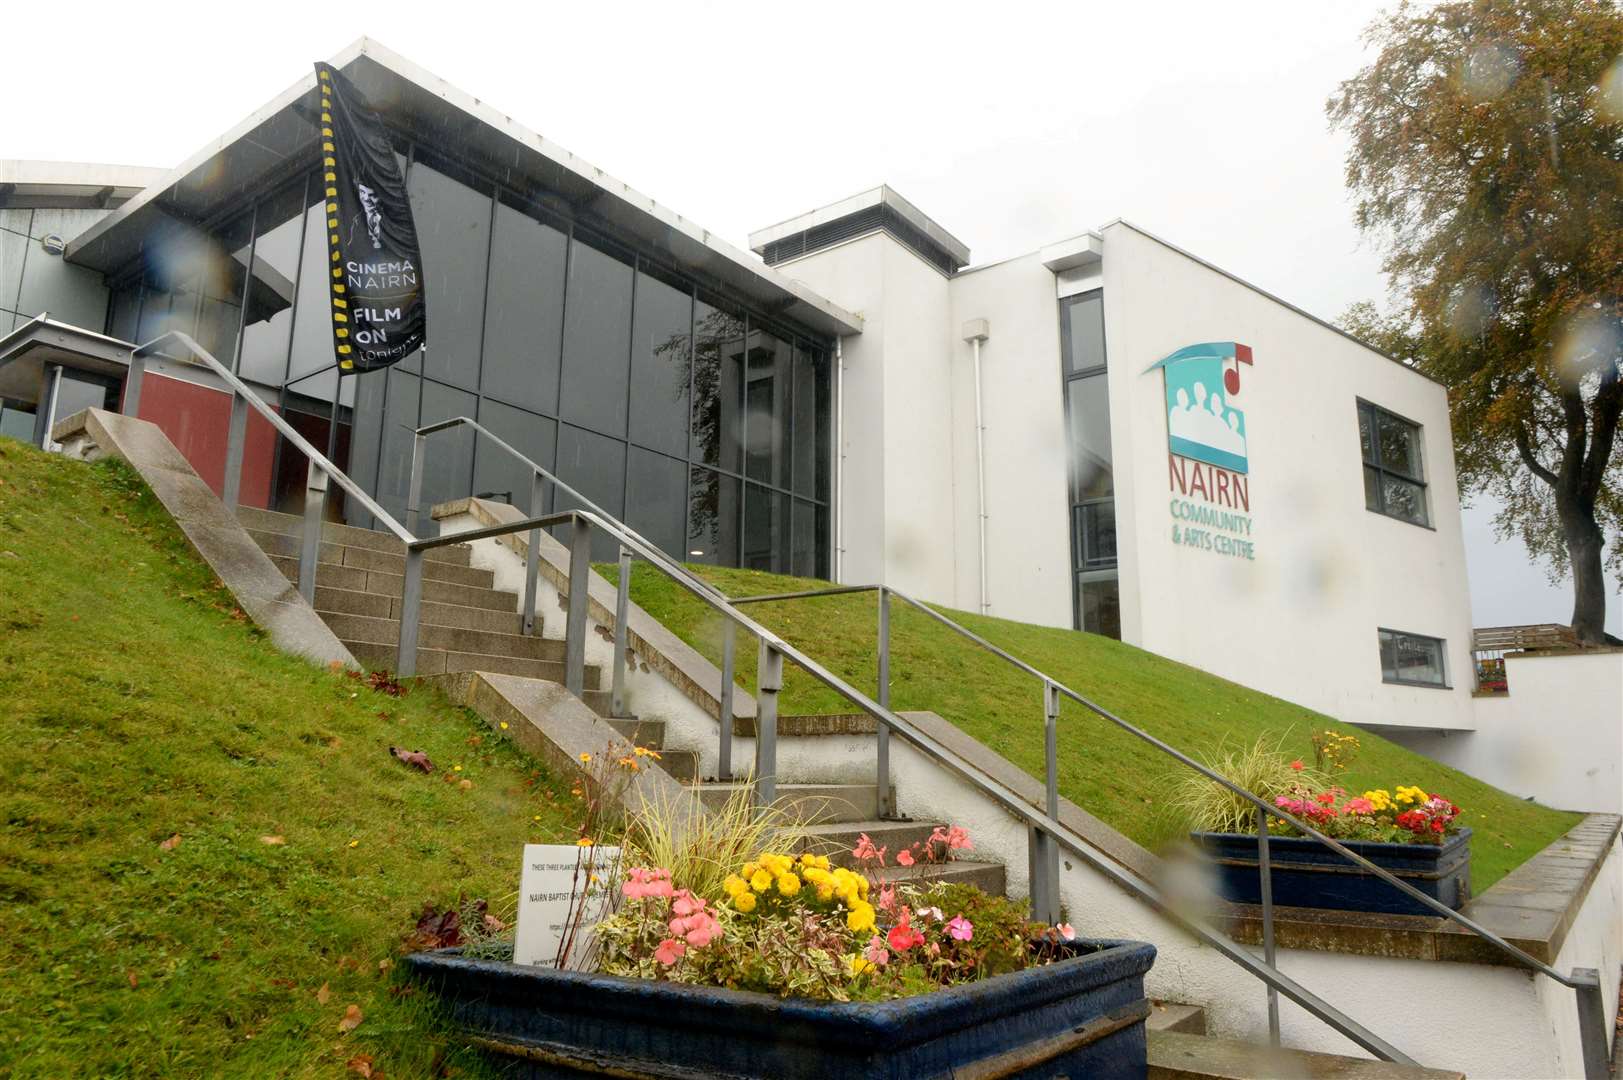 Nairn Community & Arts Centre.